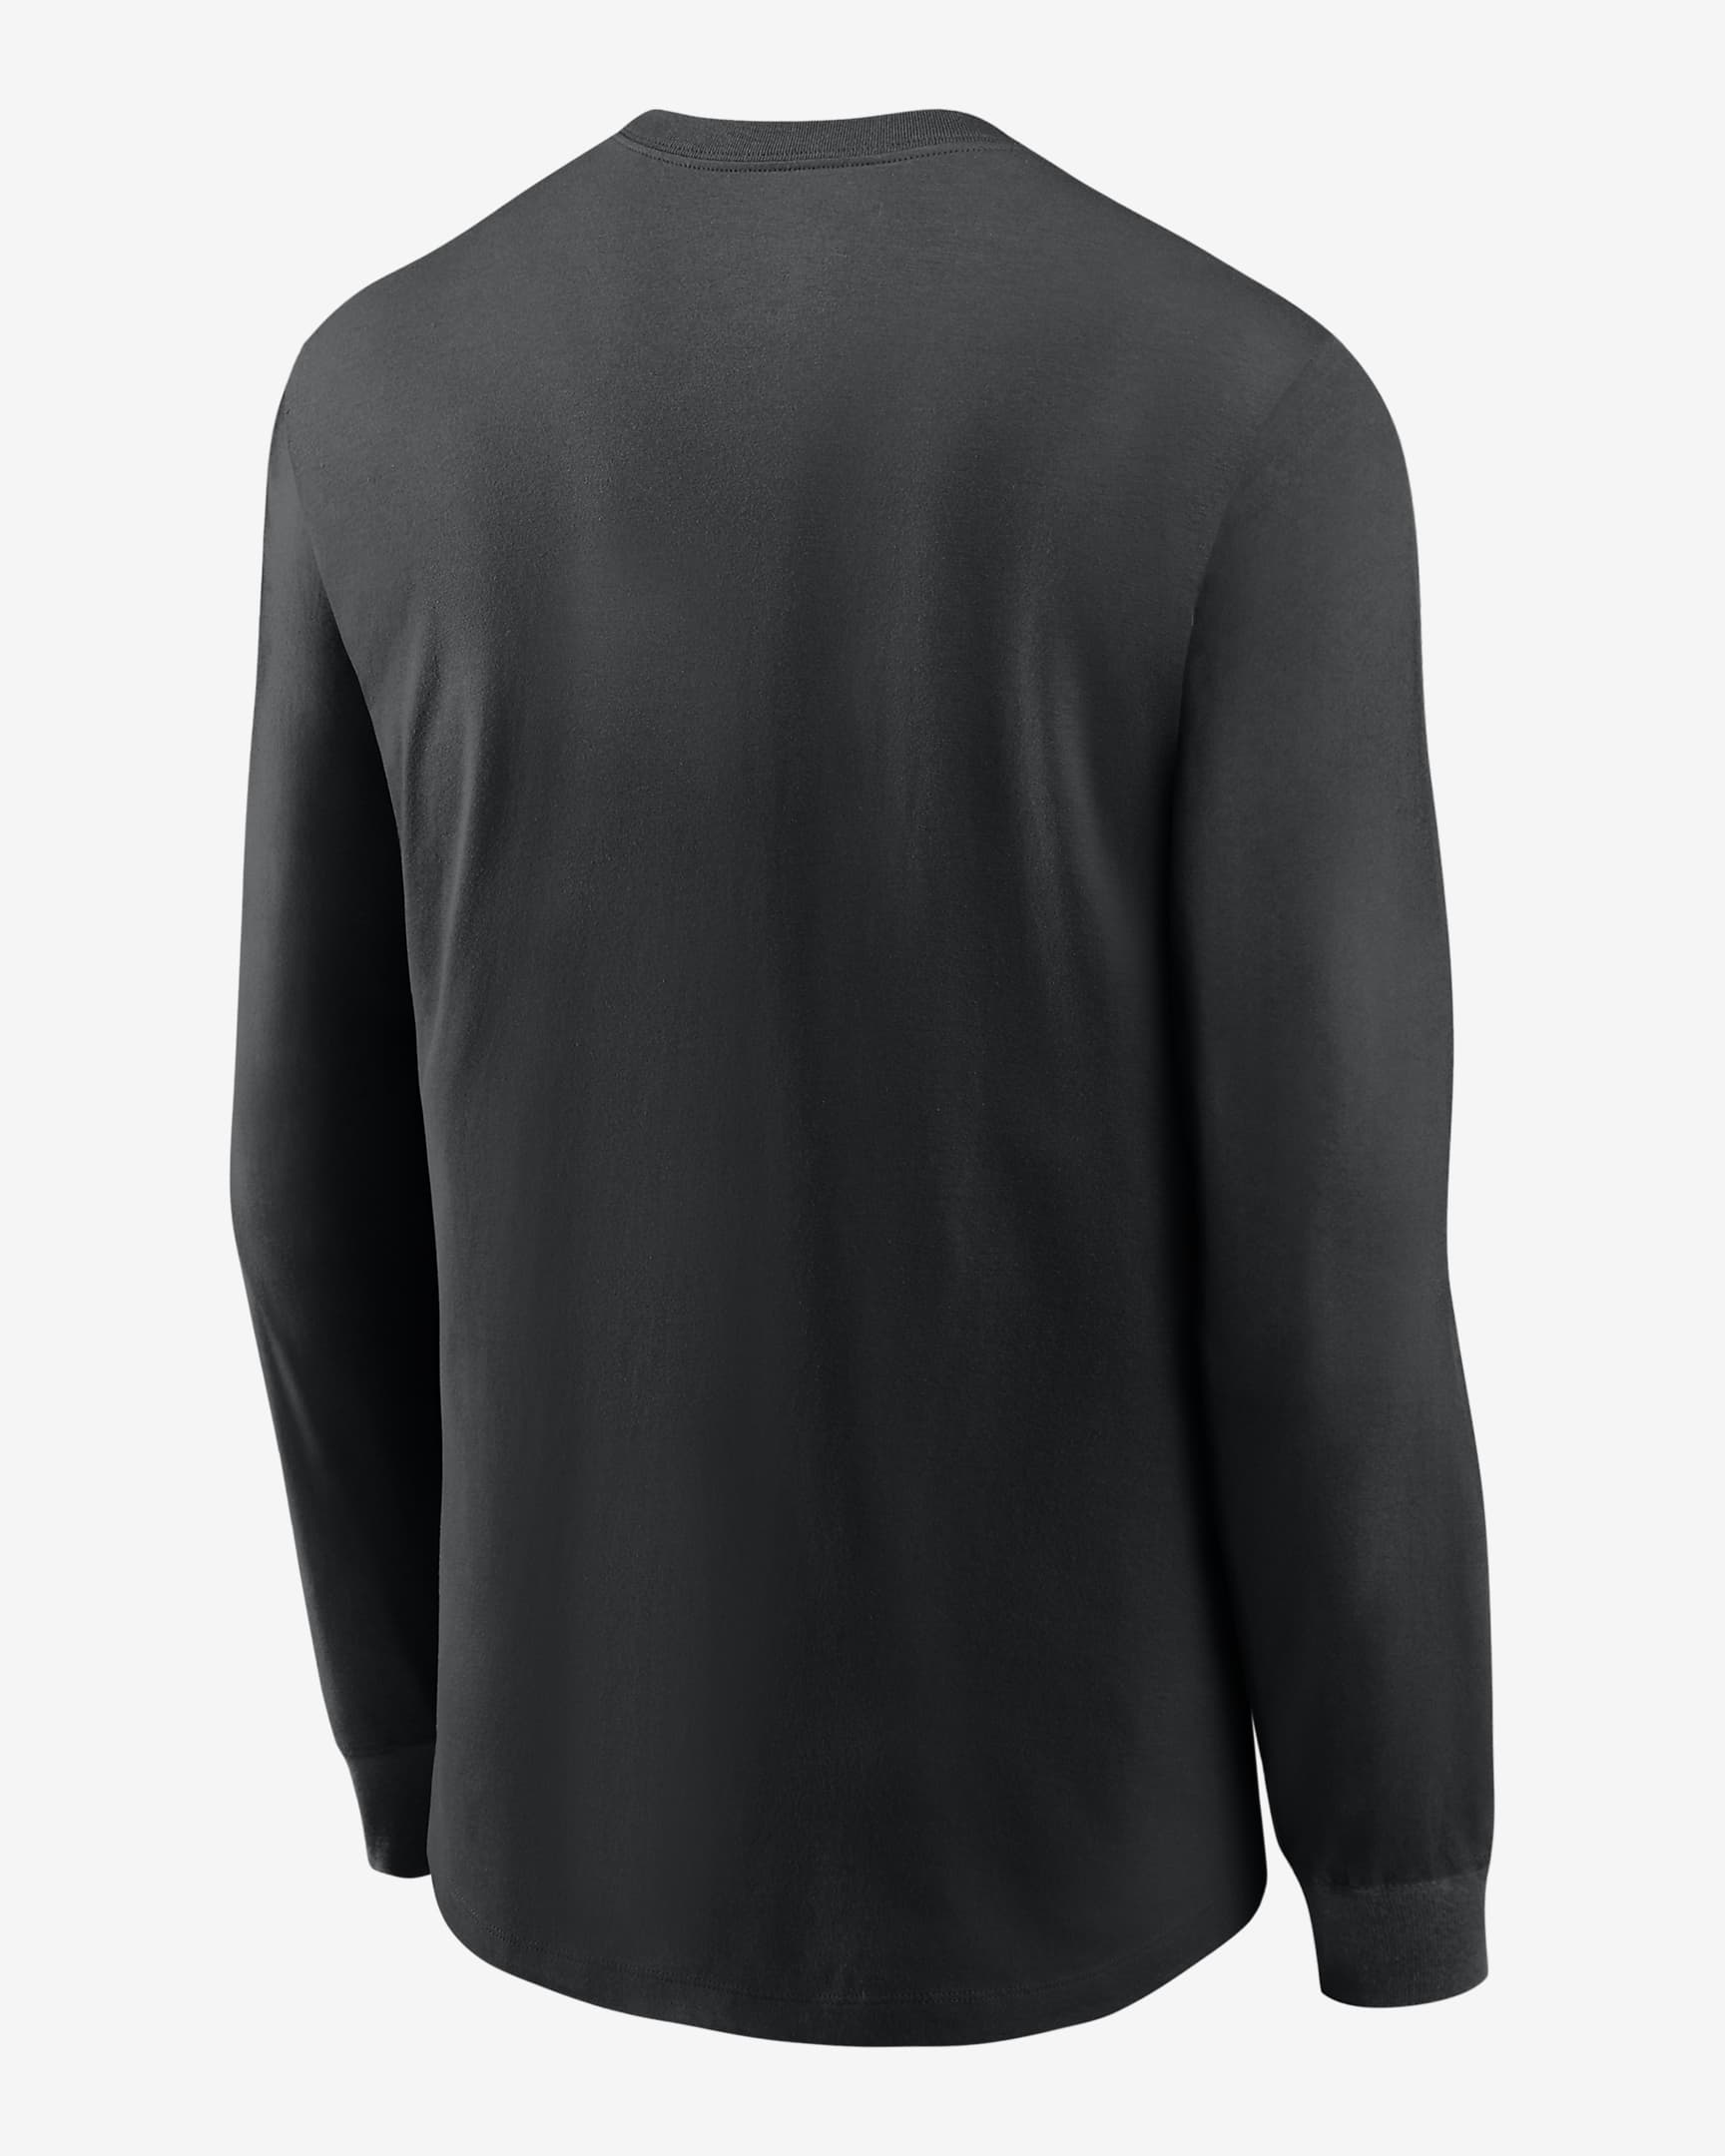 Nike Primary Logo (NFL New Orleans Saints) Men’s Long-Sleeve T-Shirt ...